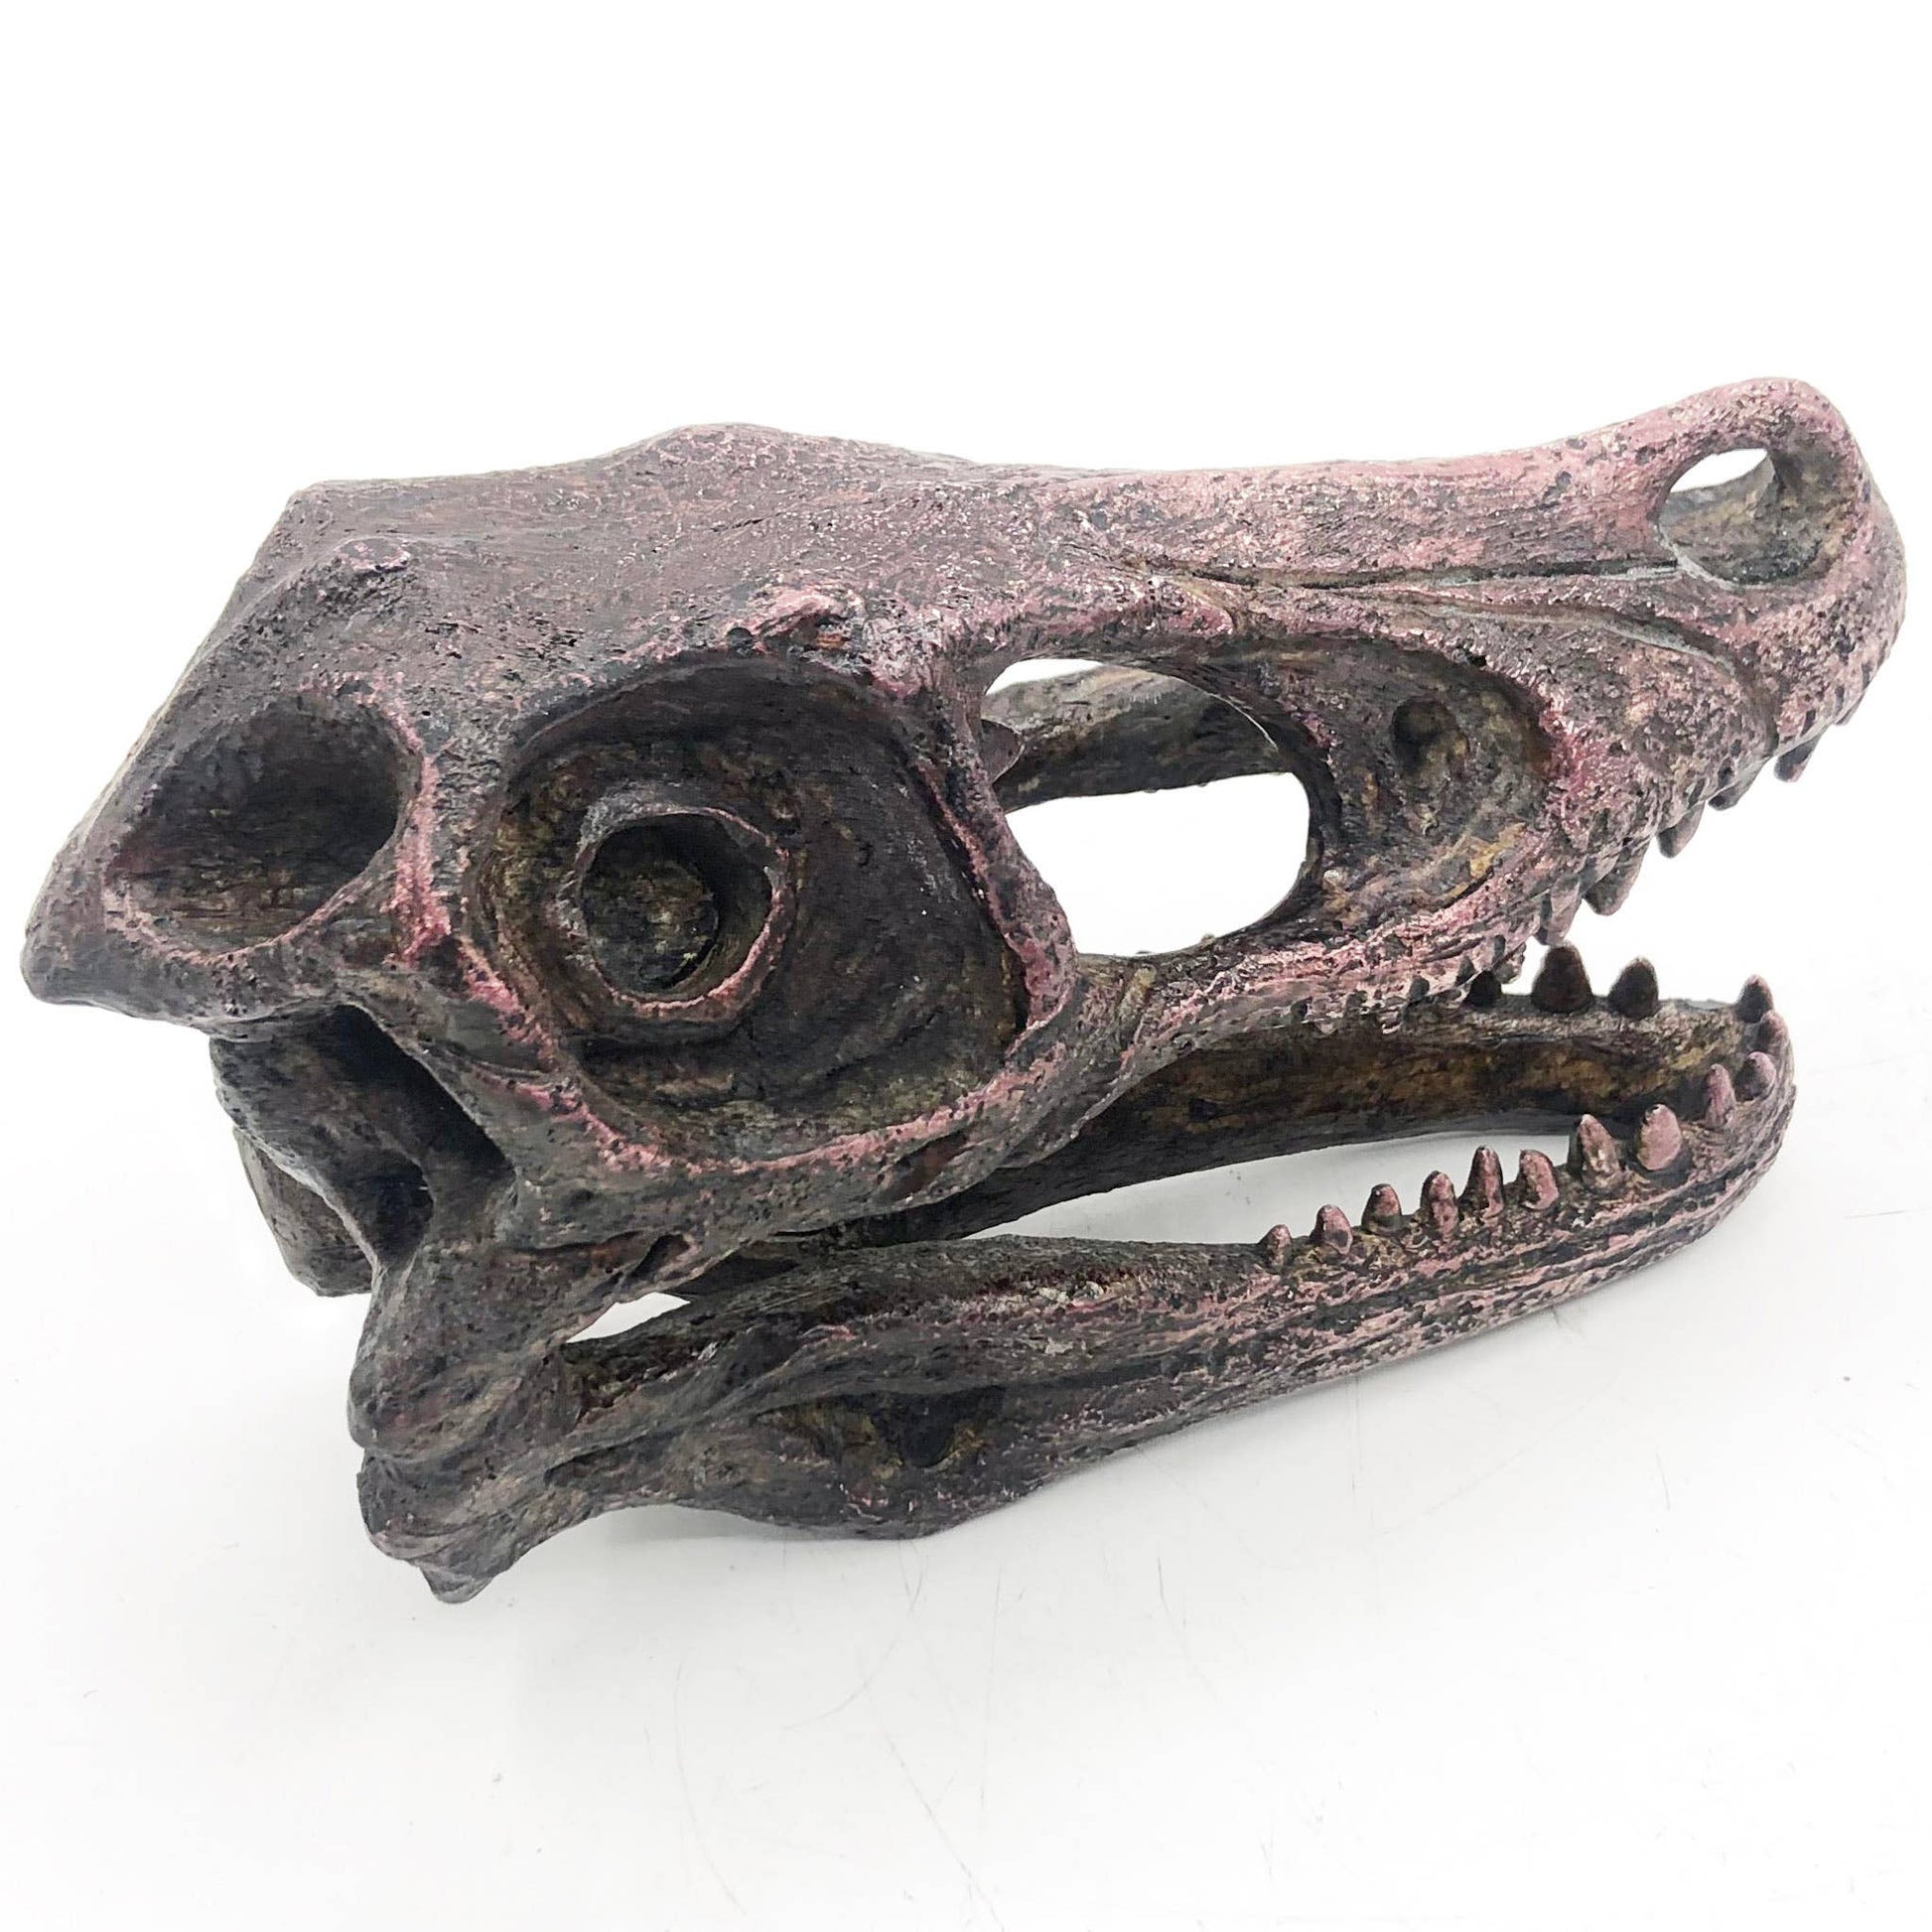 Replica Velociraptor Mini Dinosaur Fossil Skull - Stemcell Science Shop